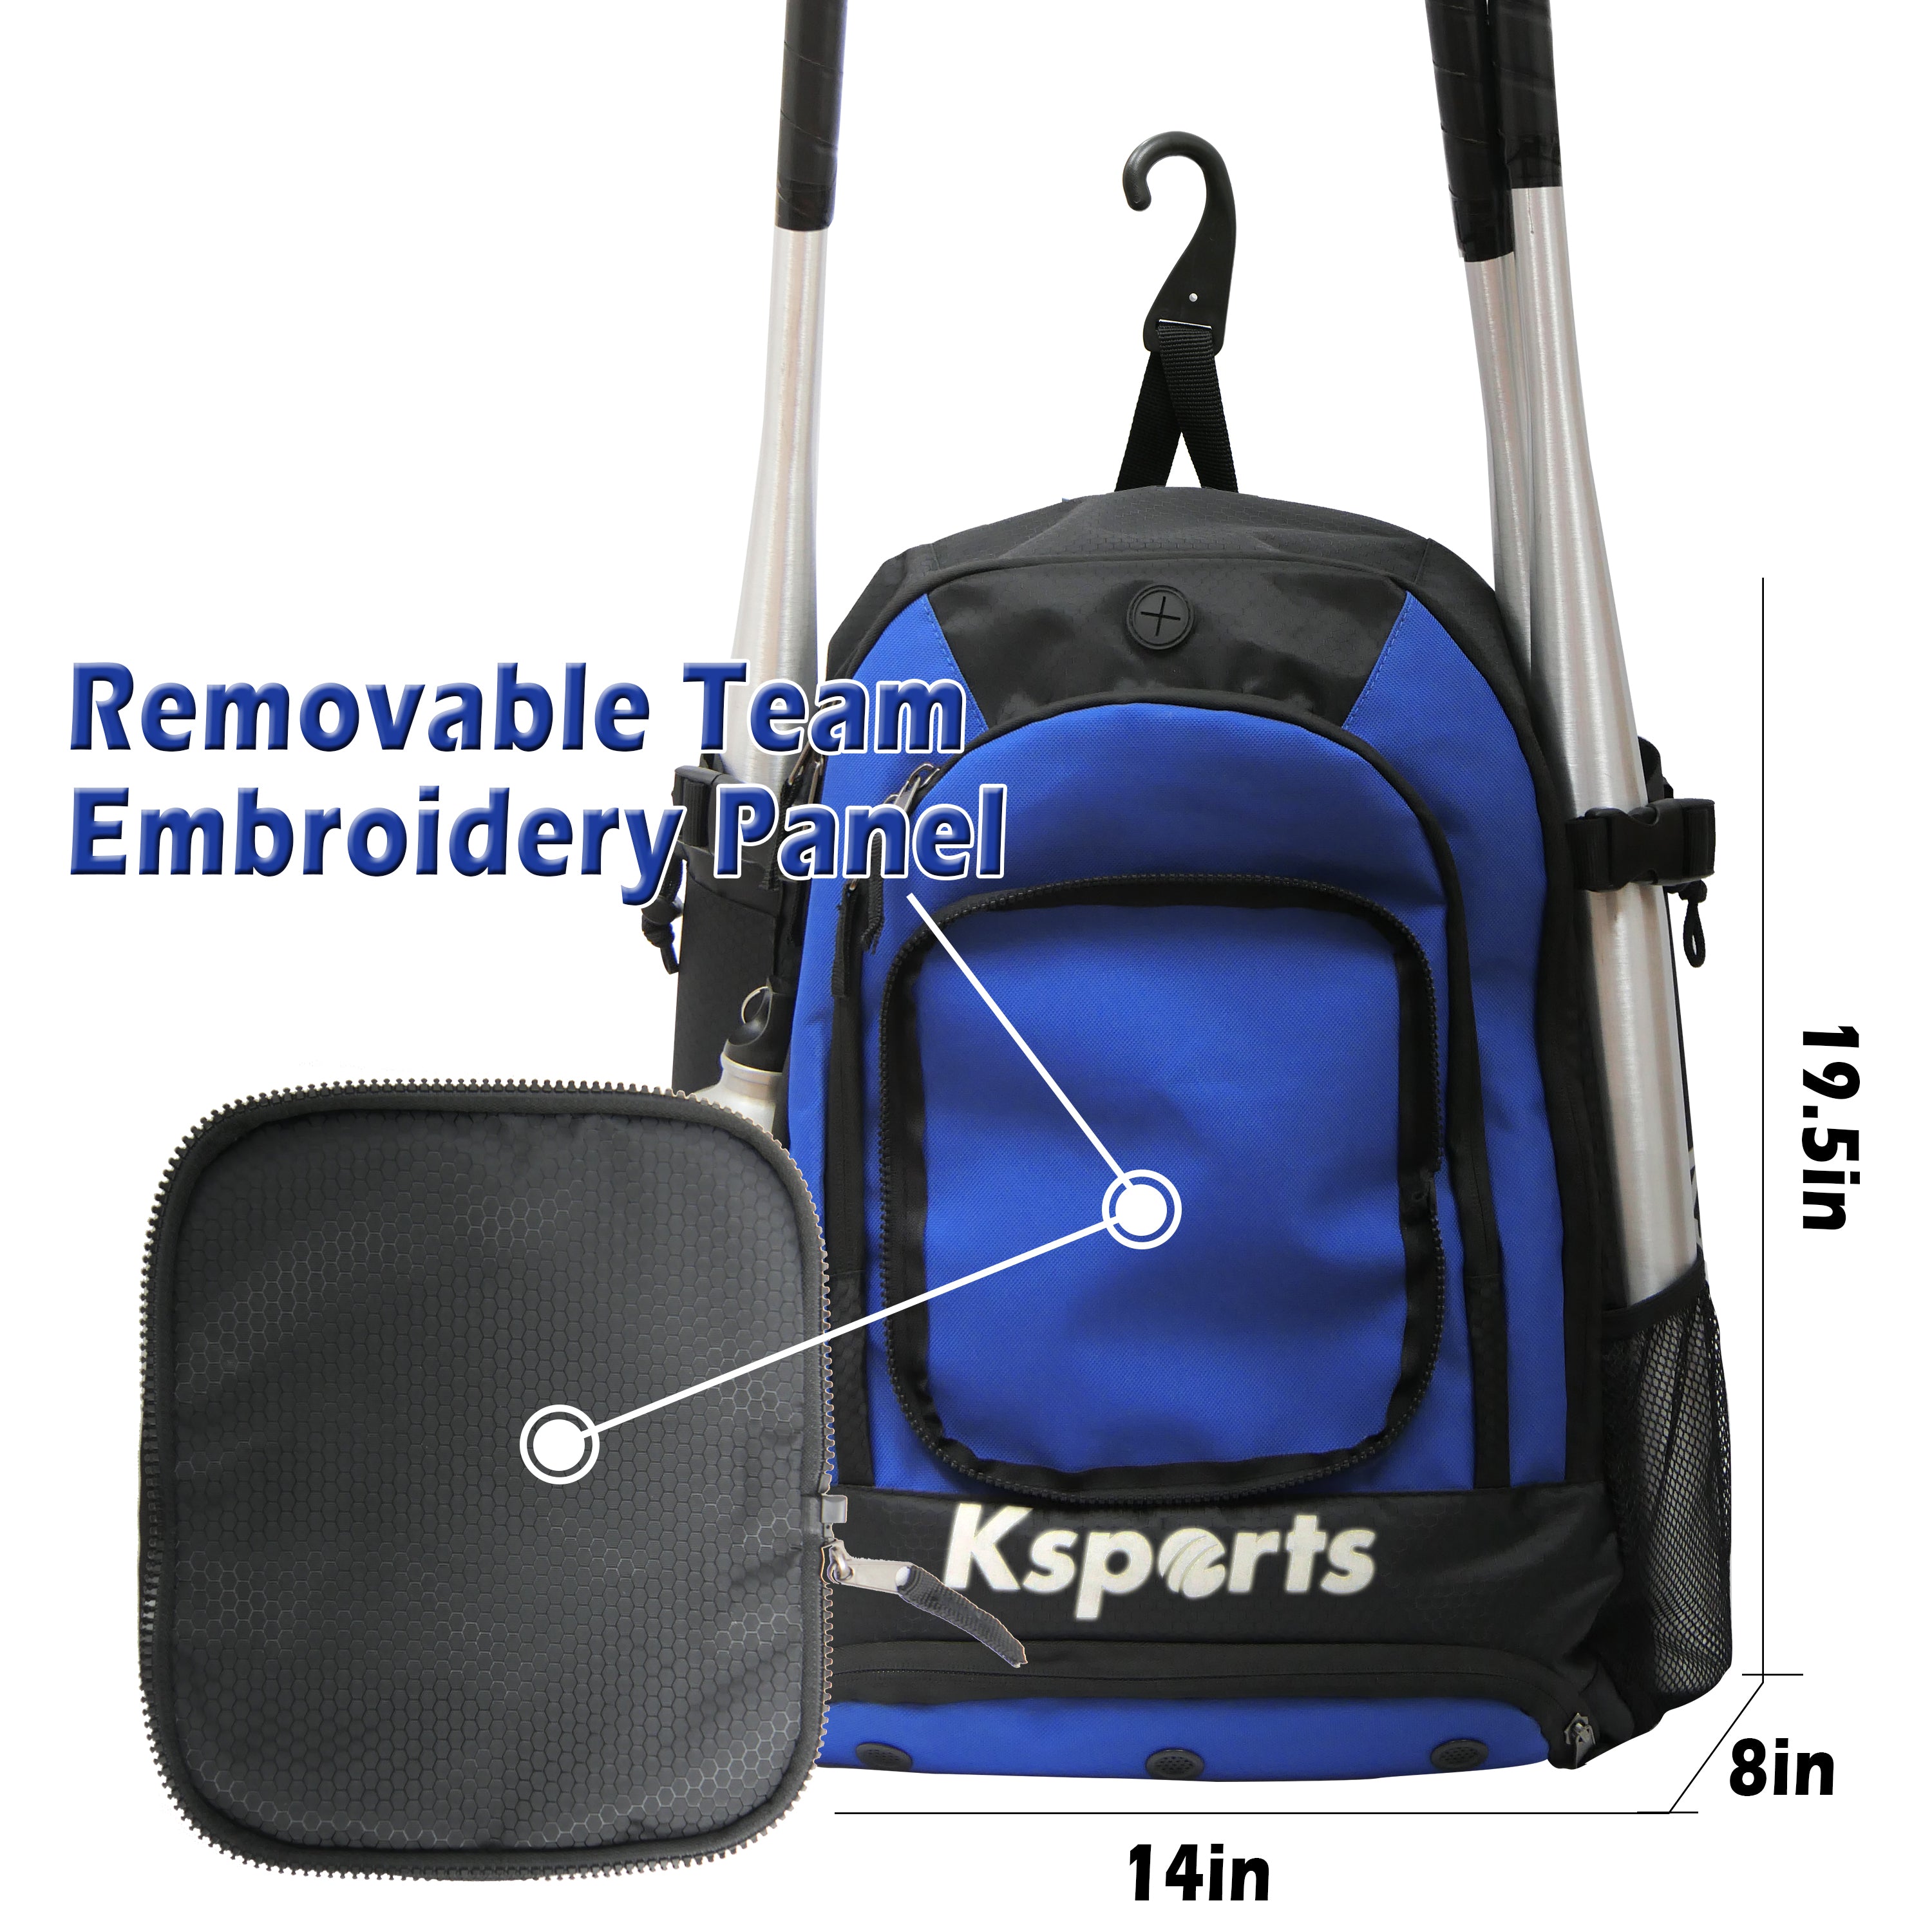 Ksports Baseball Backpack Black & Blue (FS1002)